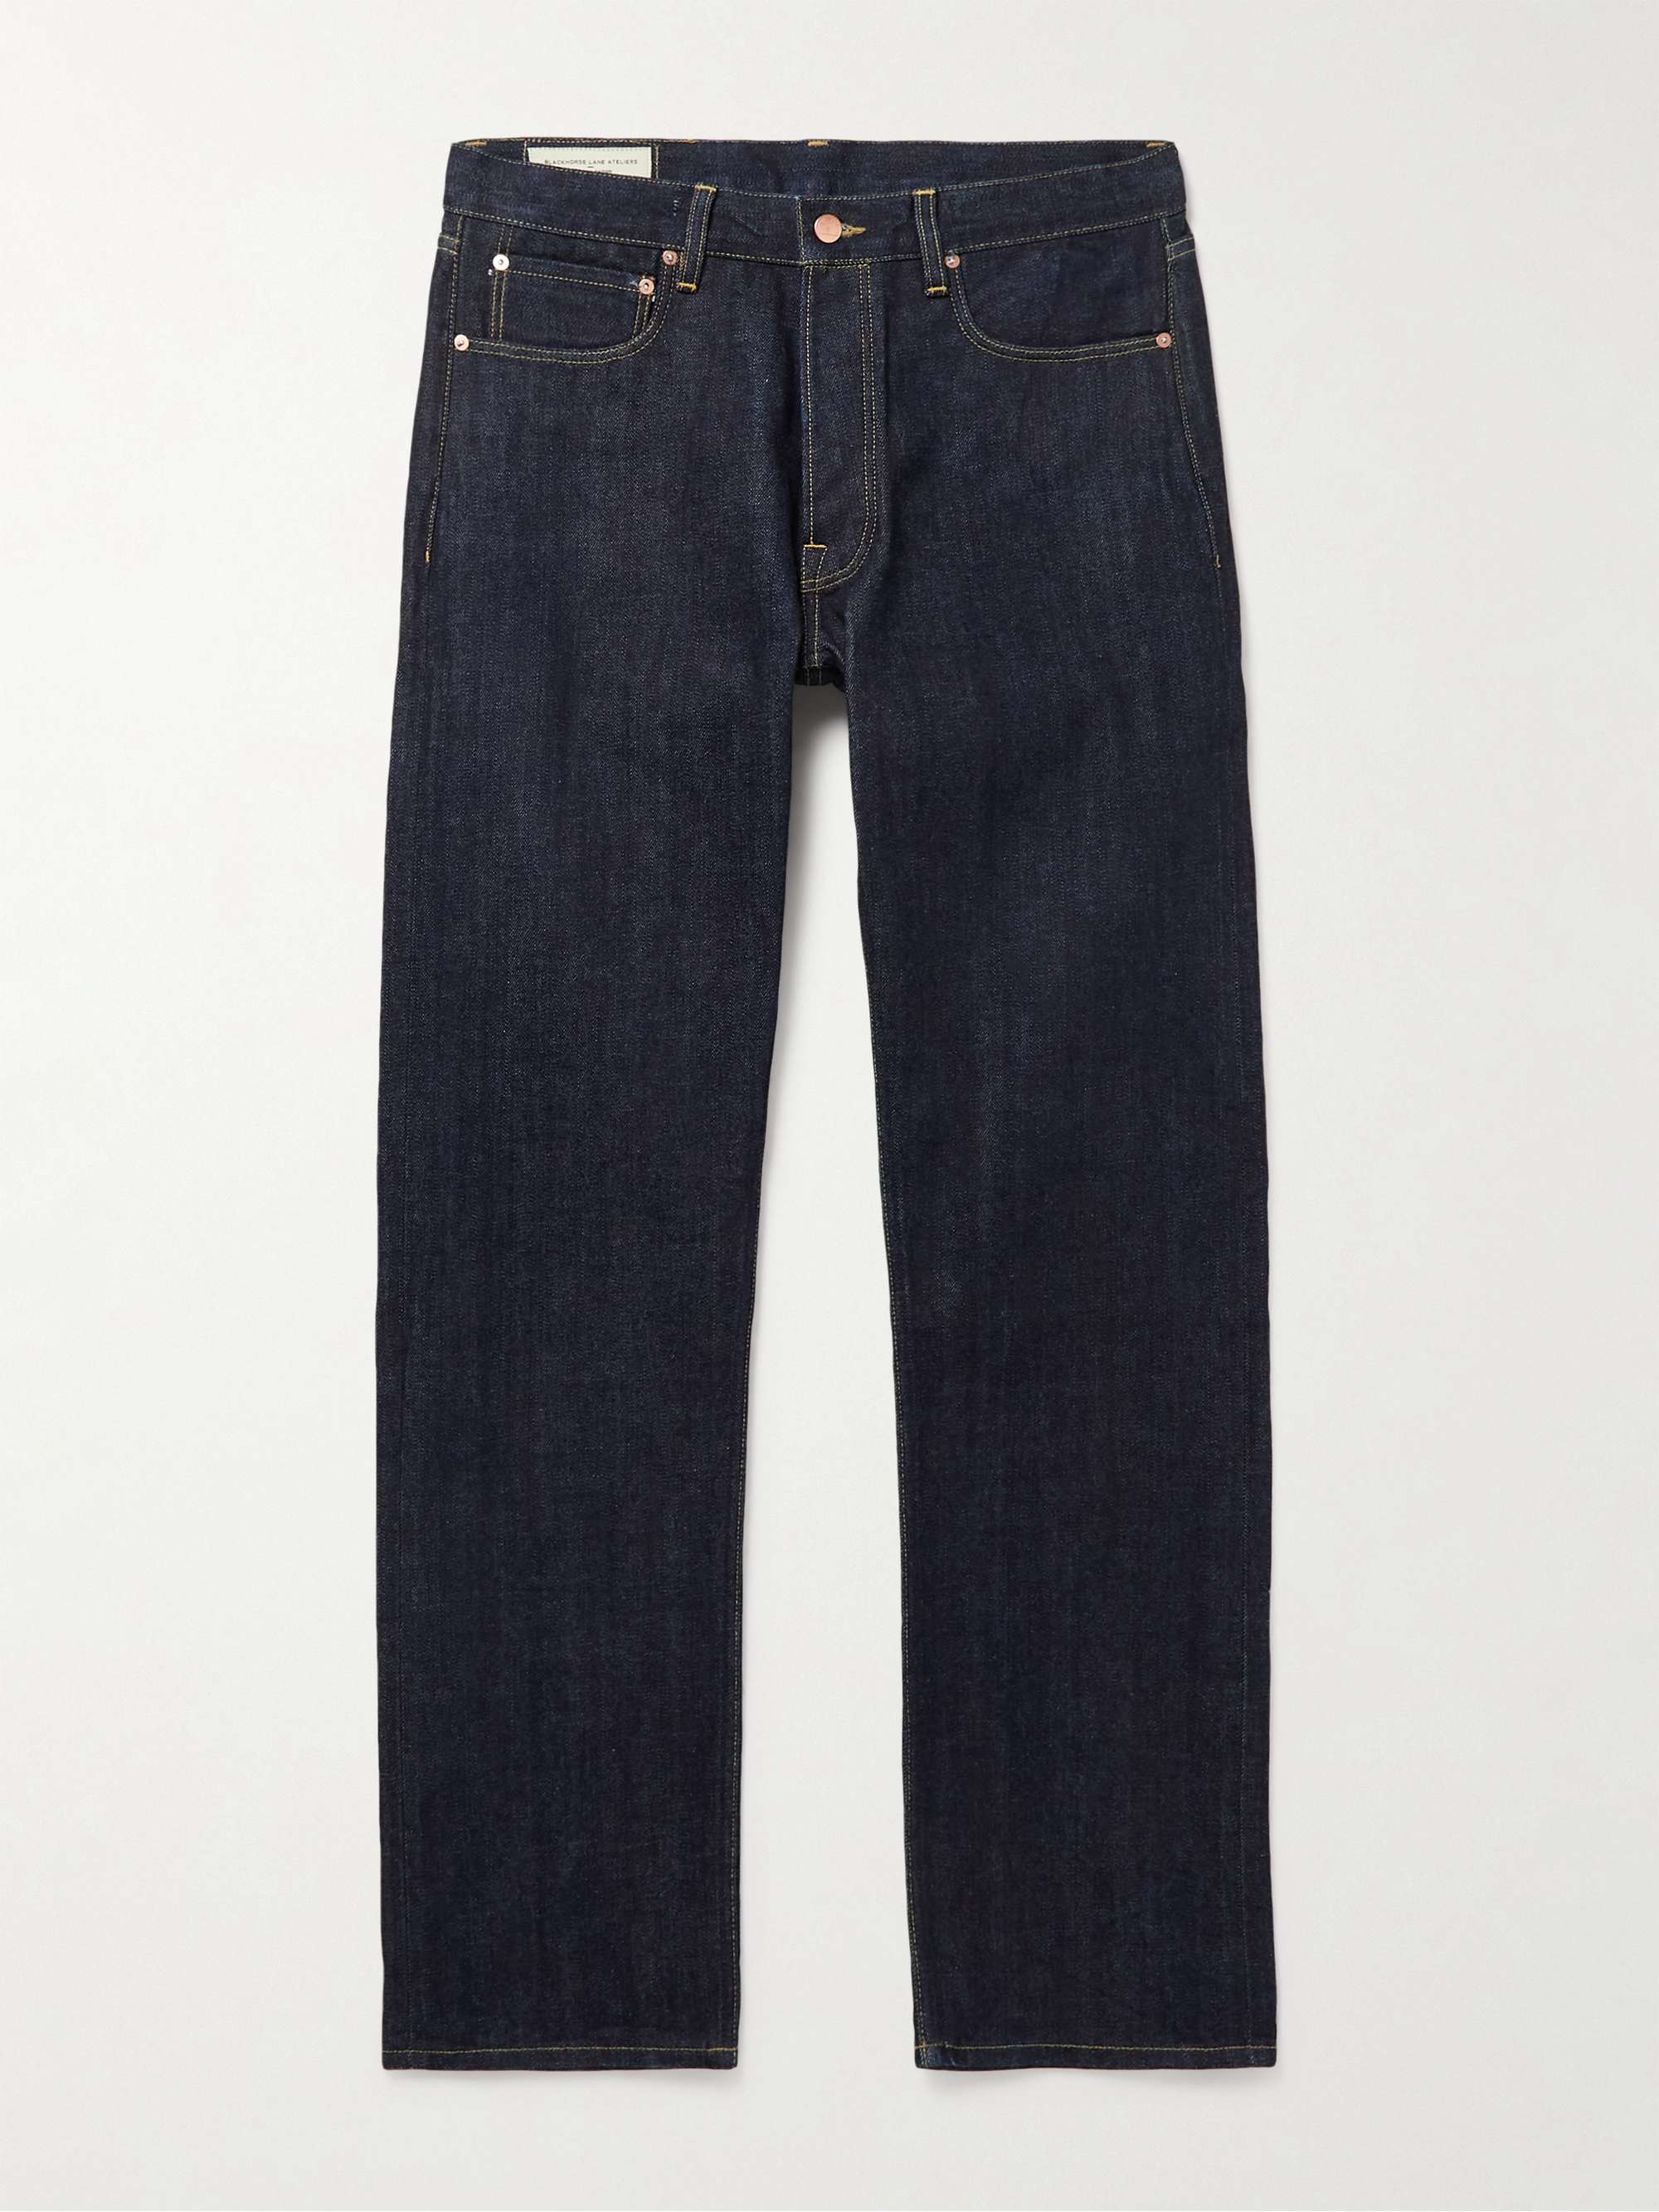 BLACKHORSE LANE ATELIERS NW1 Straight-Leg Selvedge Denim Jeans